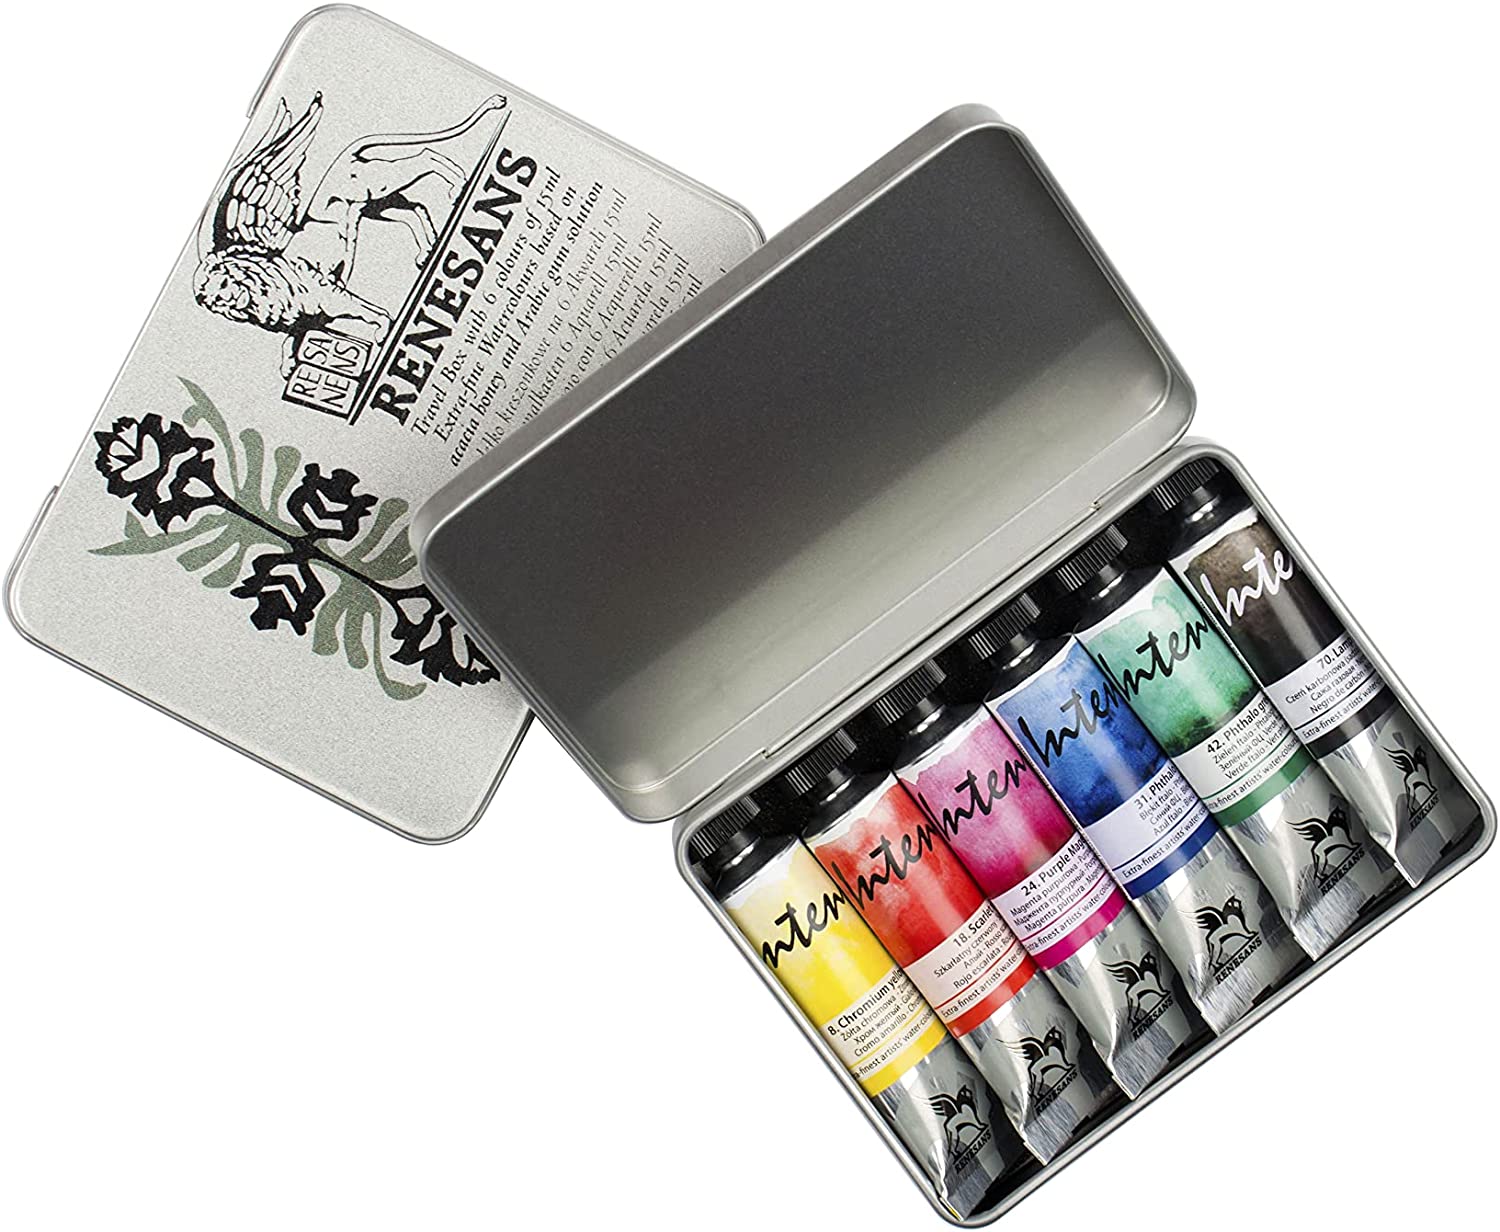 Winsor & Newton Professional Watercolour Lightweight Metal Box Set 24 Half  Pans -  Denmark